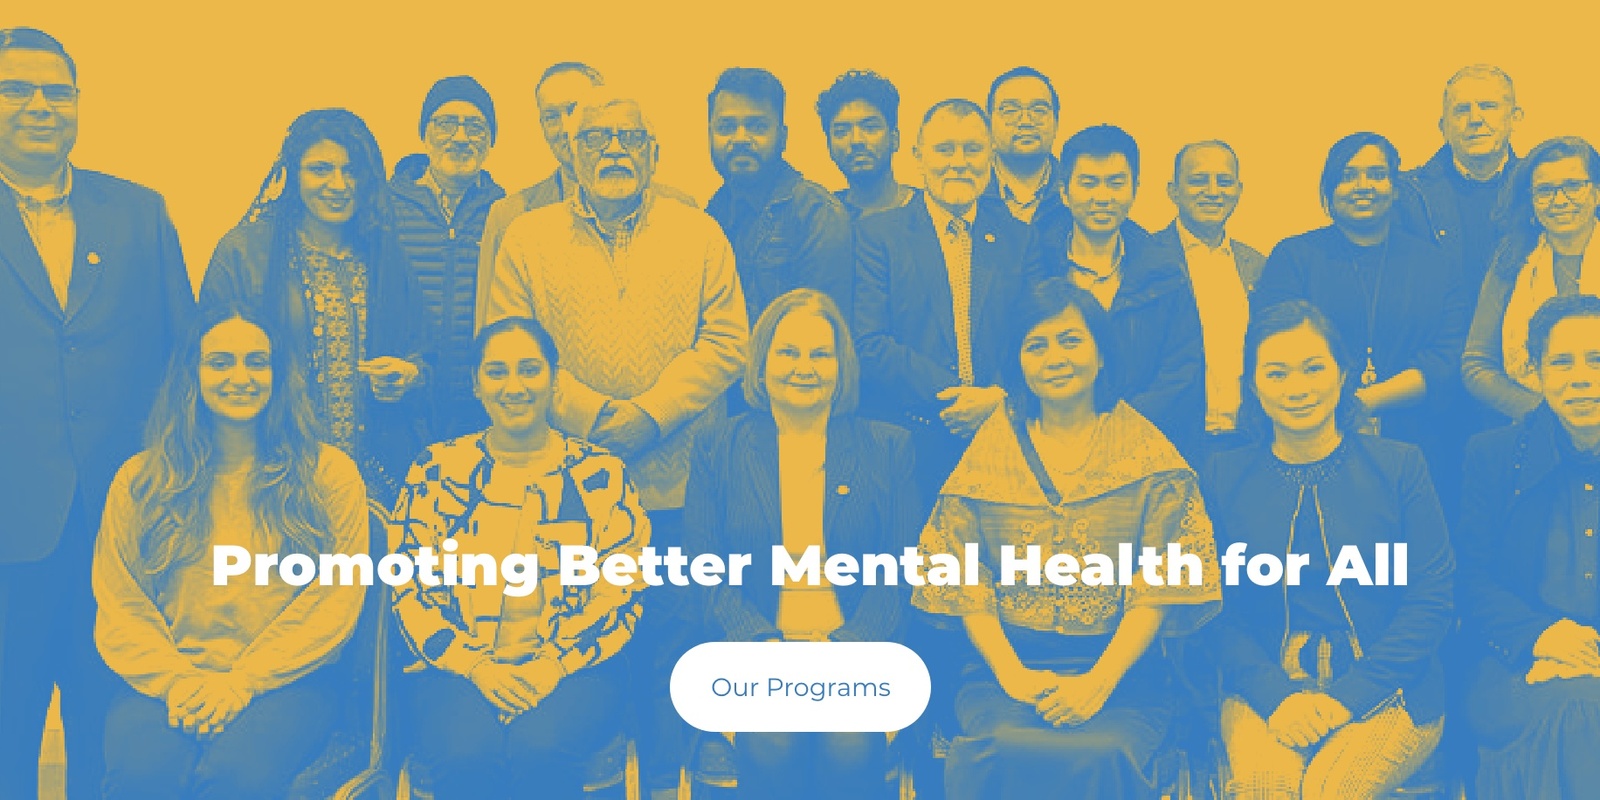 Mental Health Foundation Australia's banner